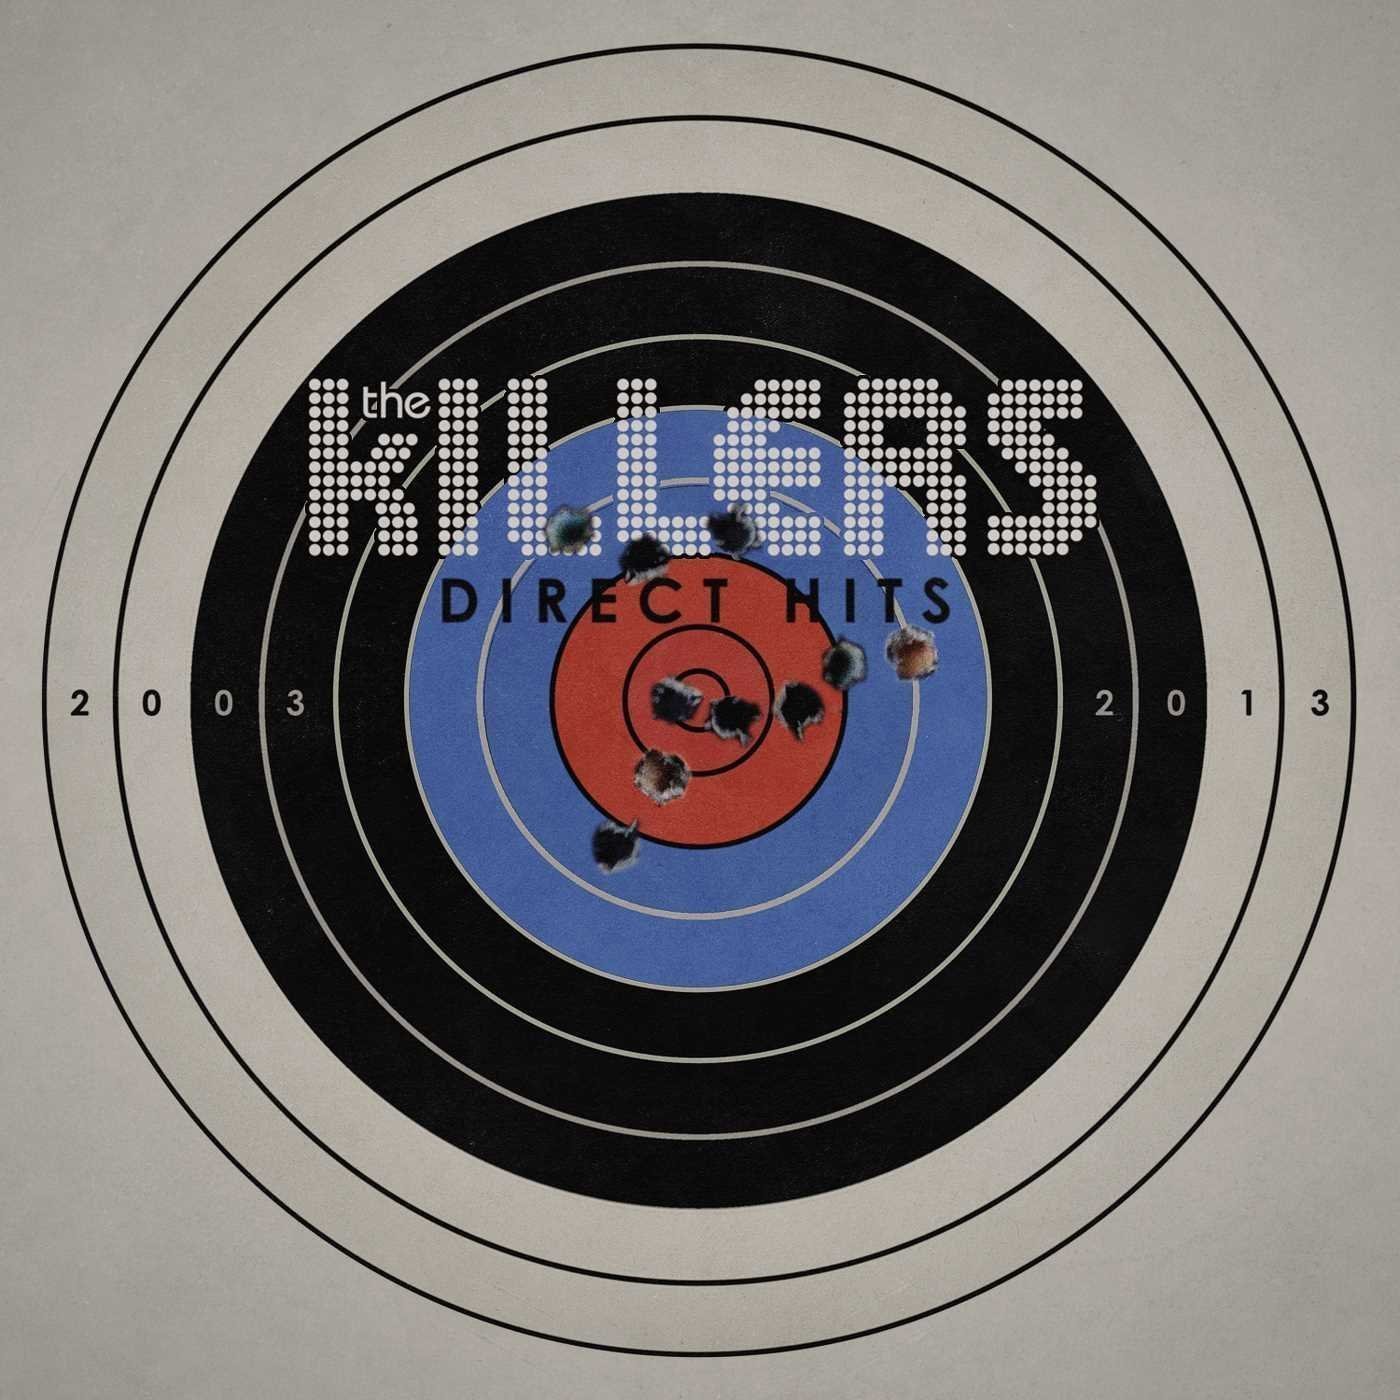 Vinylskiva The Killers - Direct Hits (2 LP)